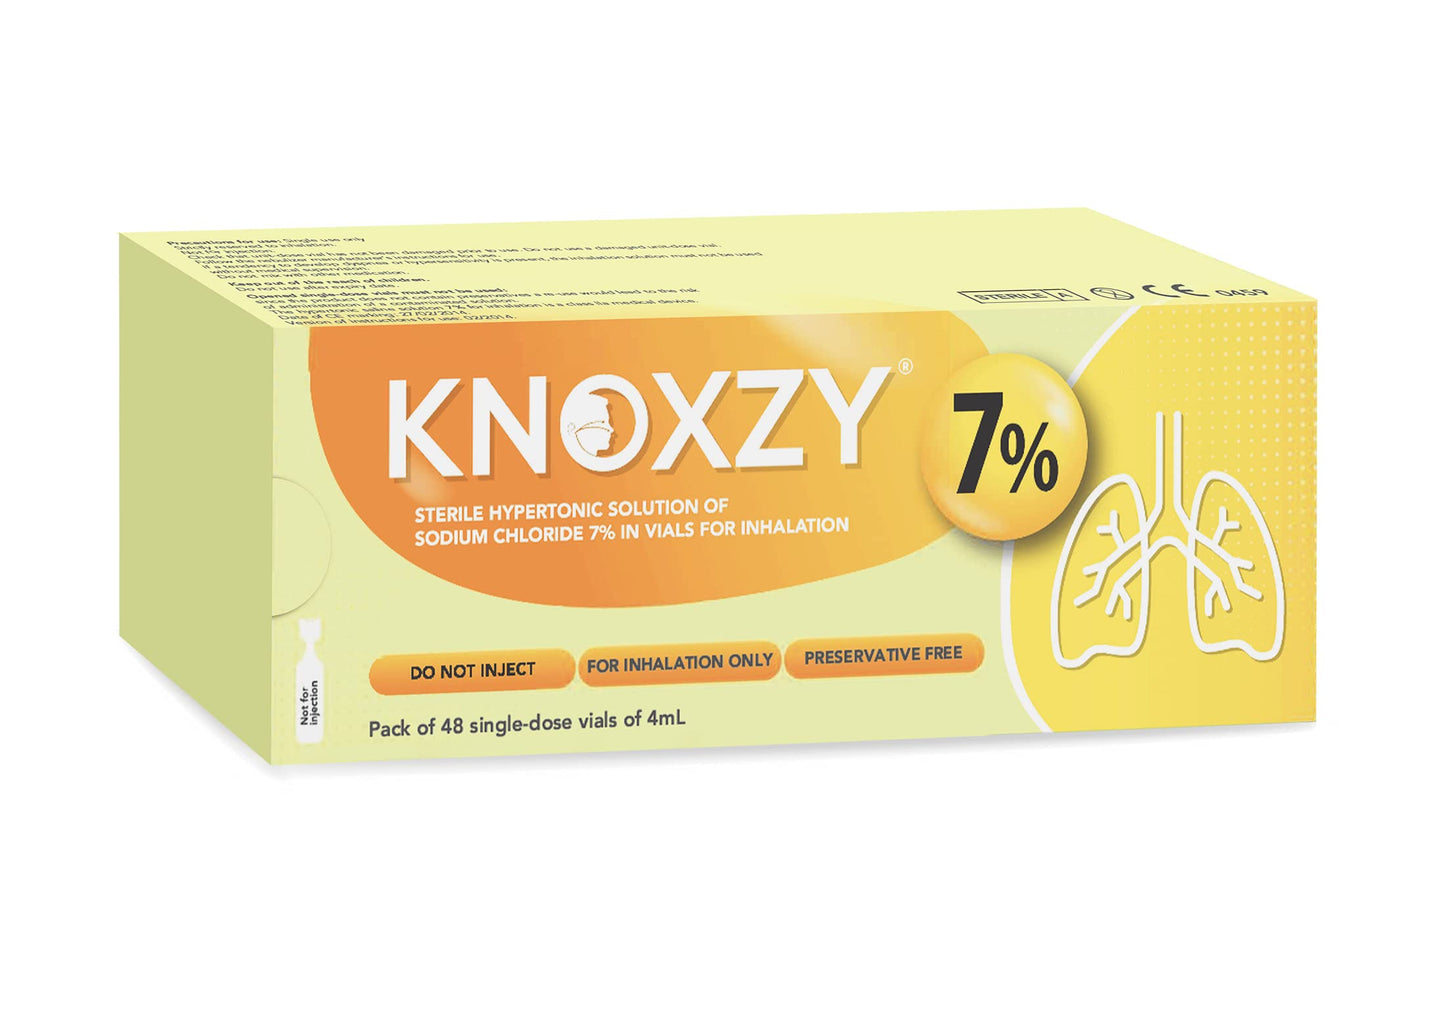 KNOXZY Sterile Hypertonic Saline Solution 7% - Vials for Inhalation - 48 x 4ml Single - Dose Vials